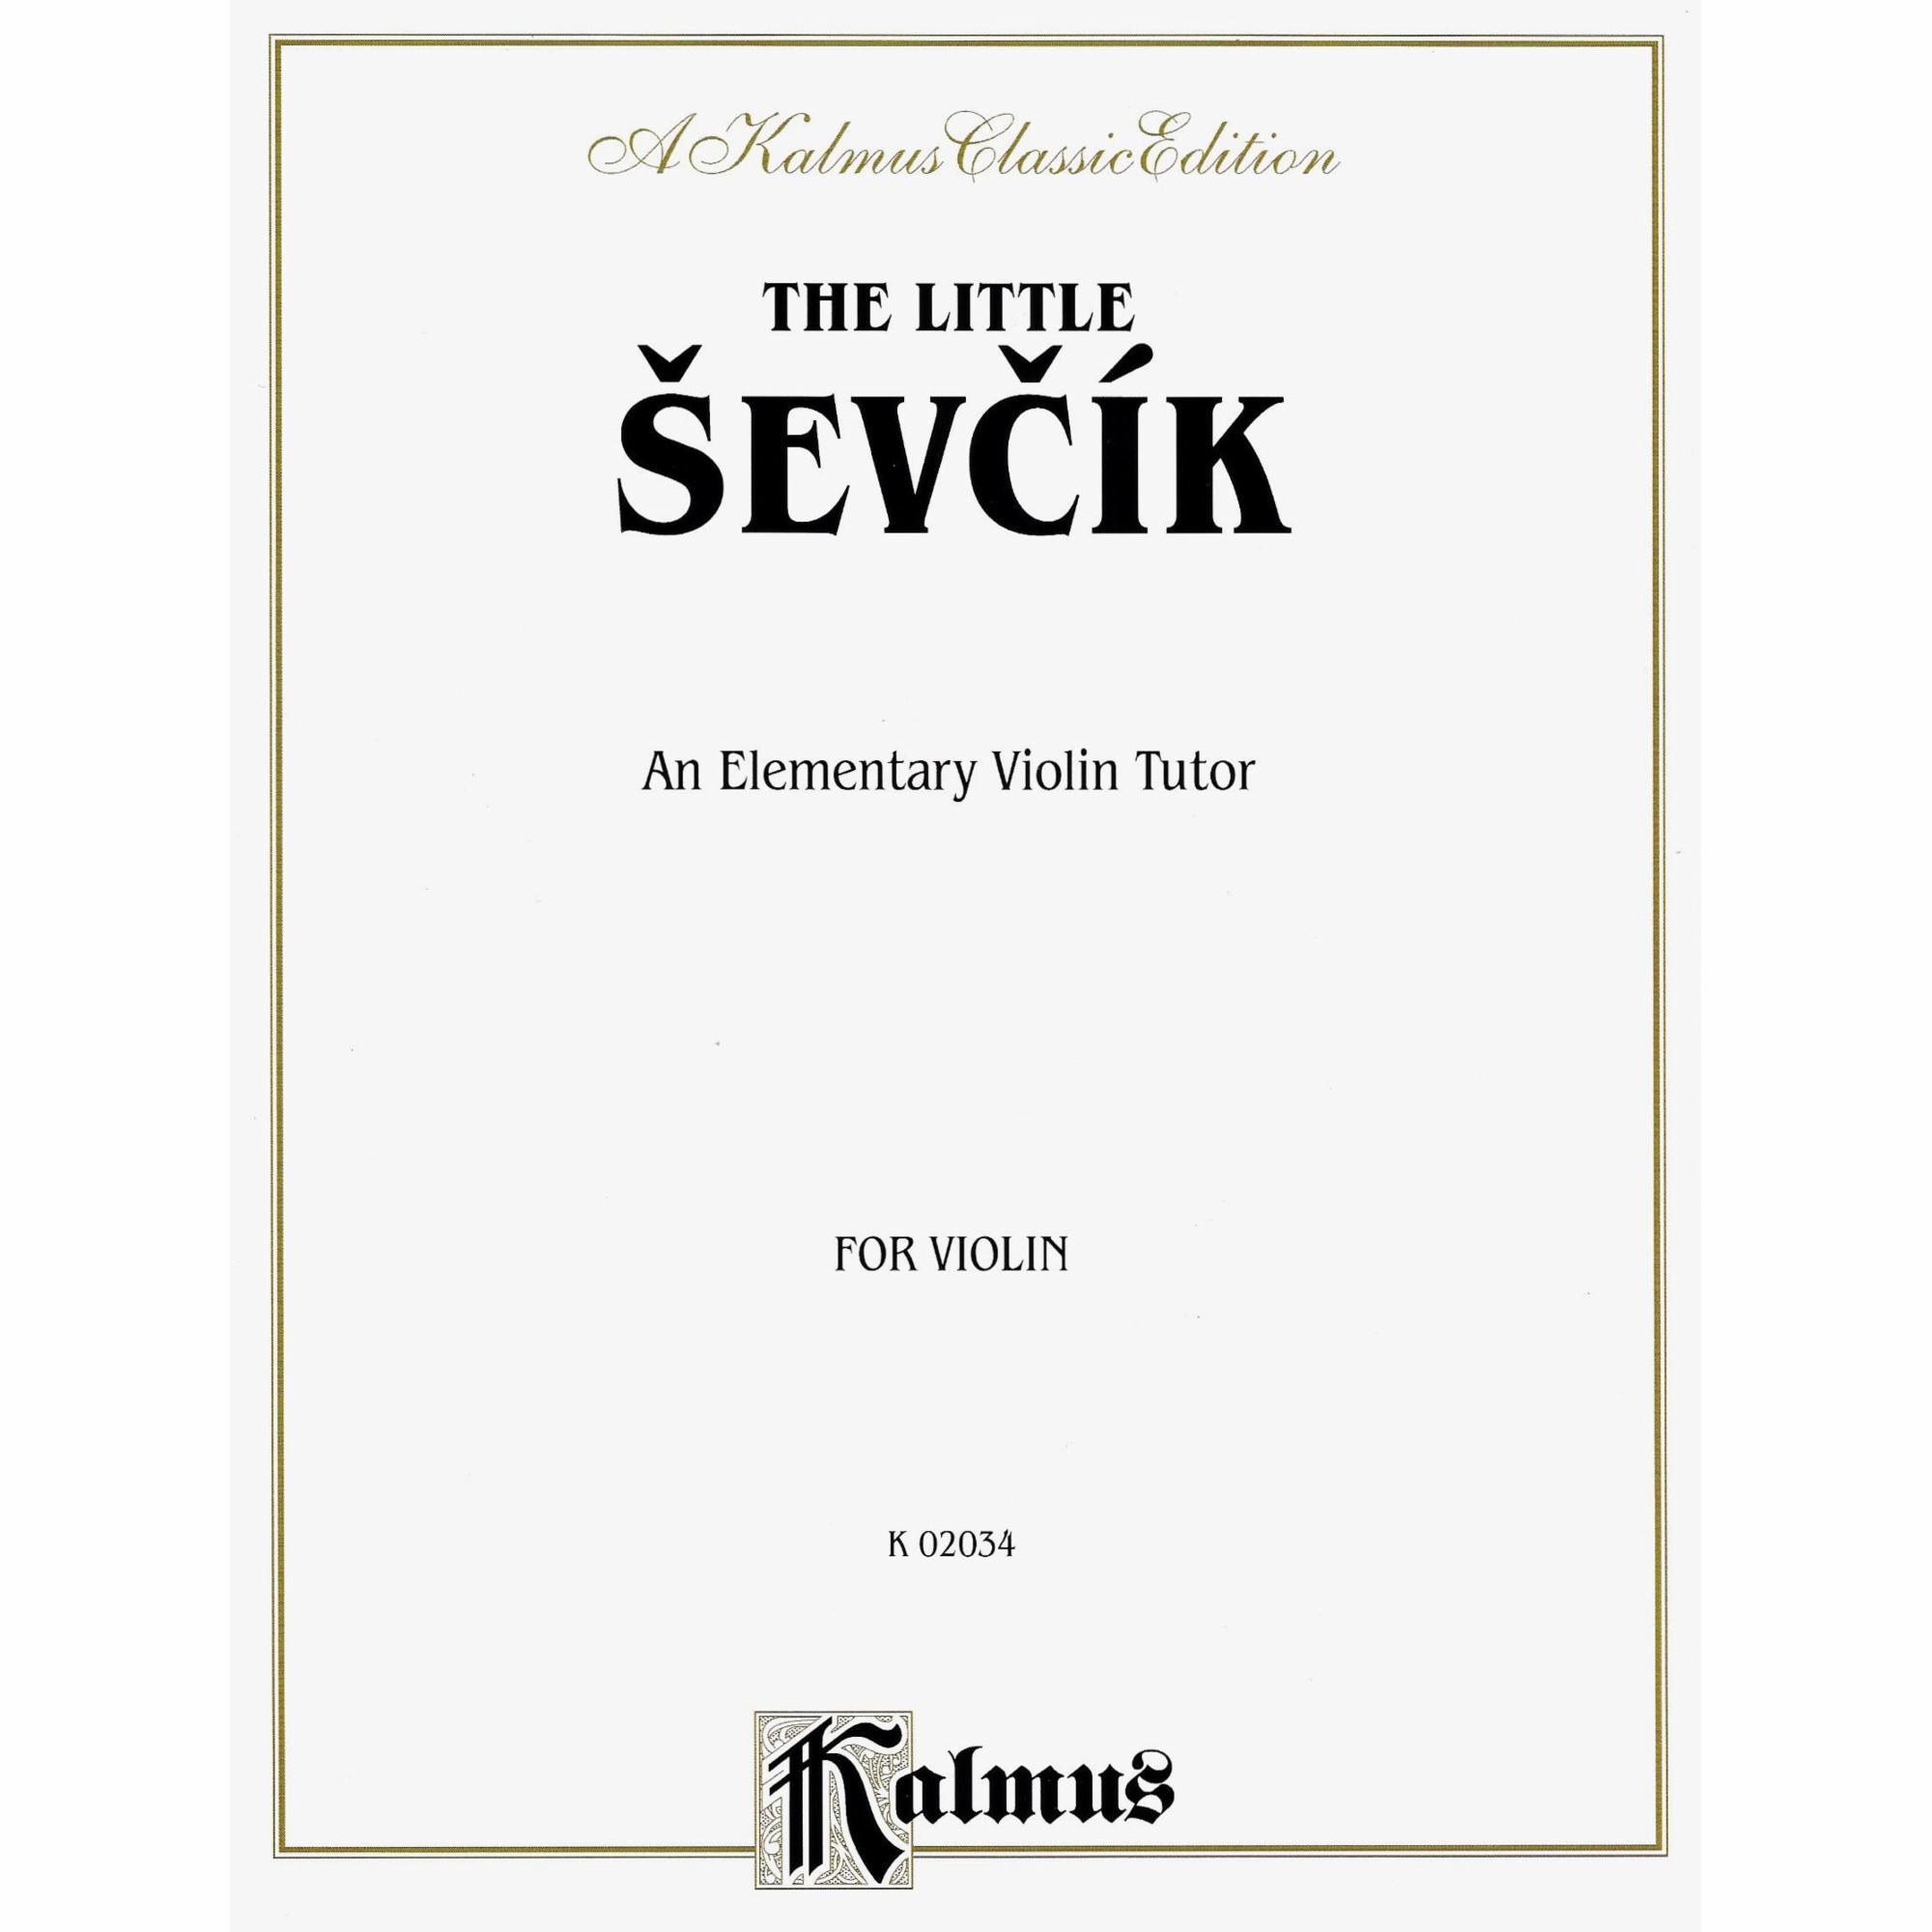 The Little Sevcik for Violin